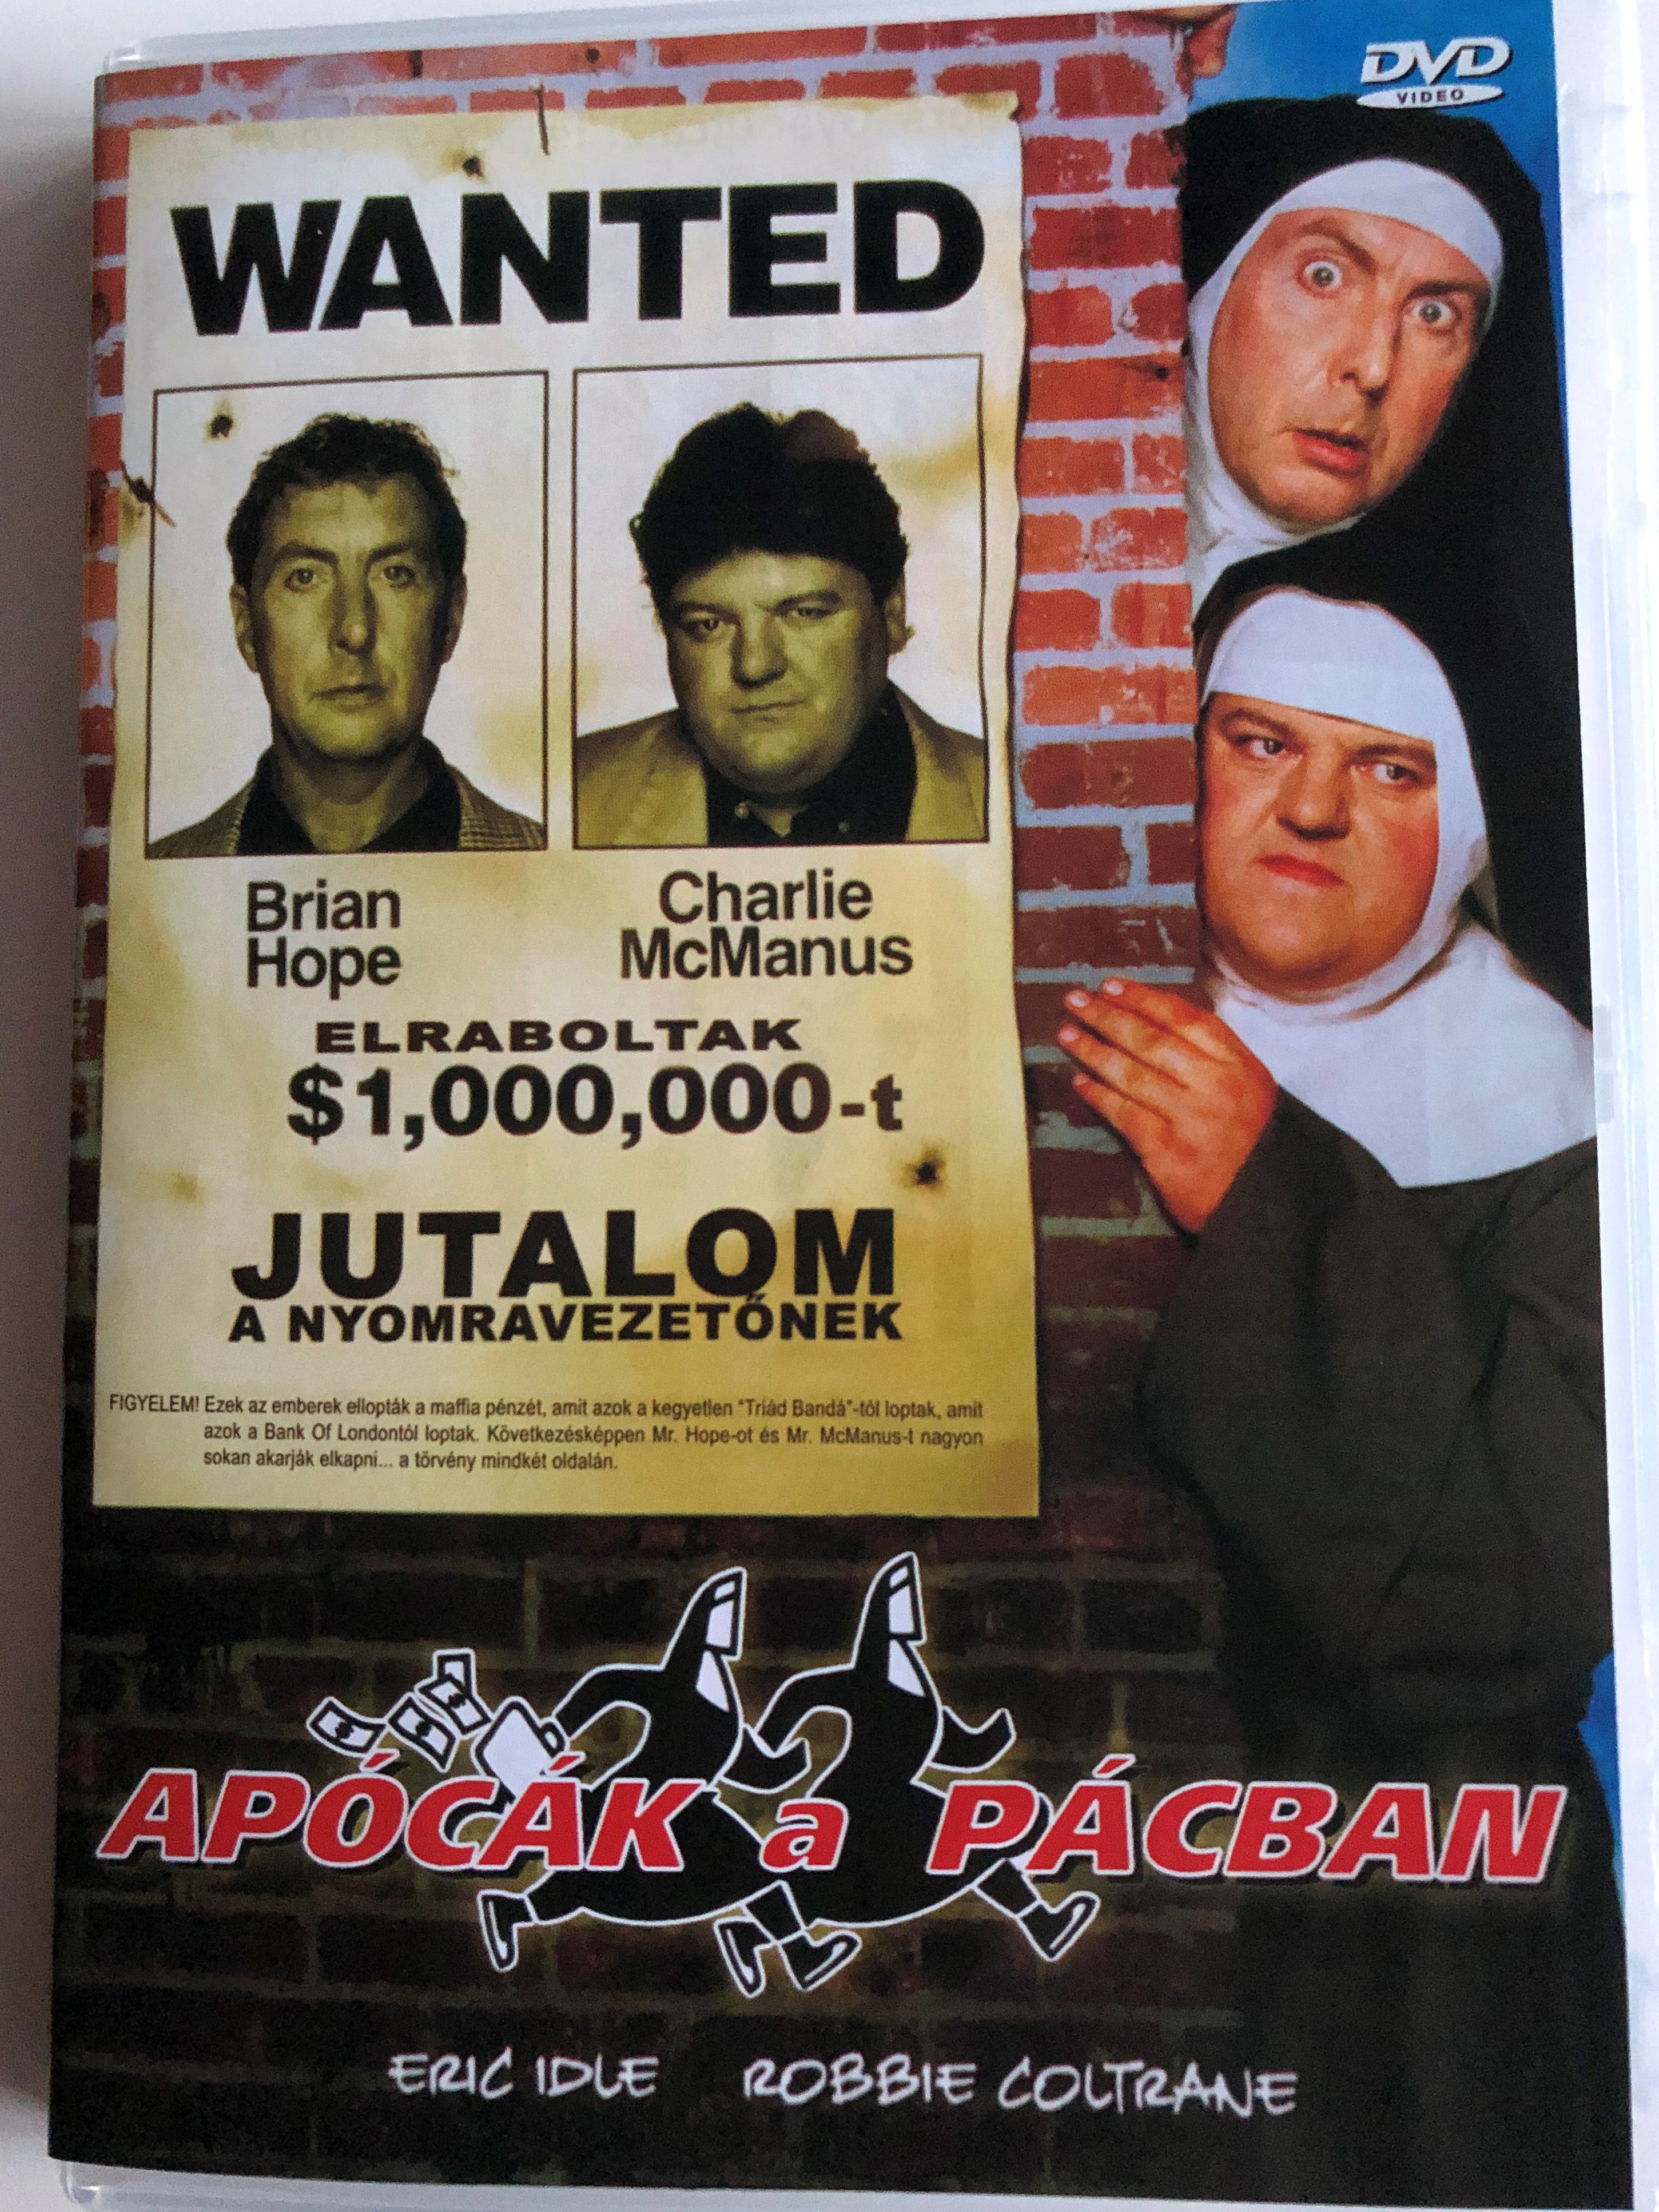 nuns-on-the-run-dvd-1990-ap-c-k-a-p-cban-1.jpg